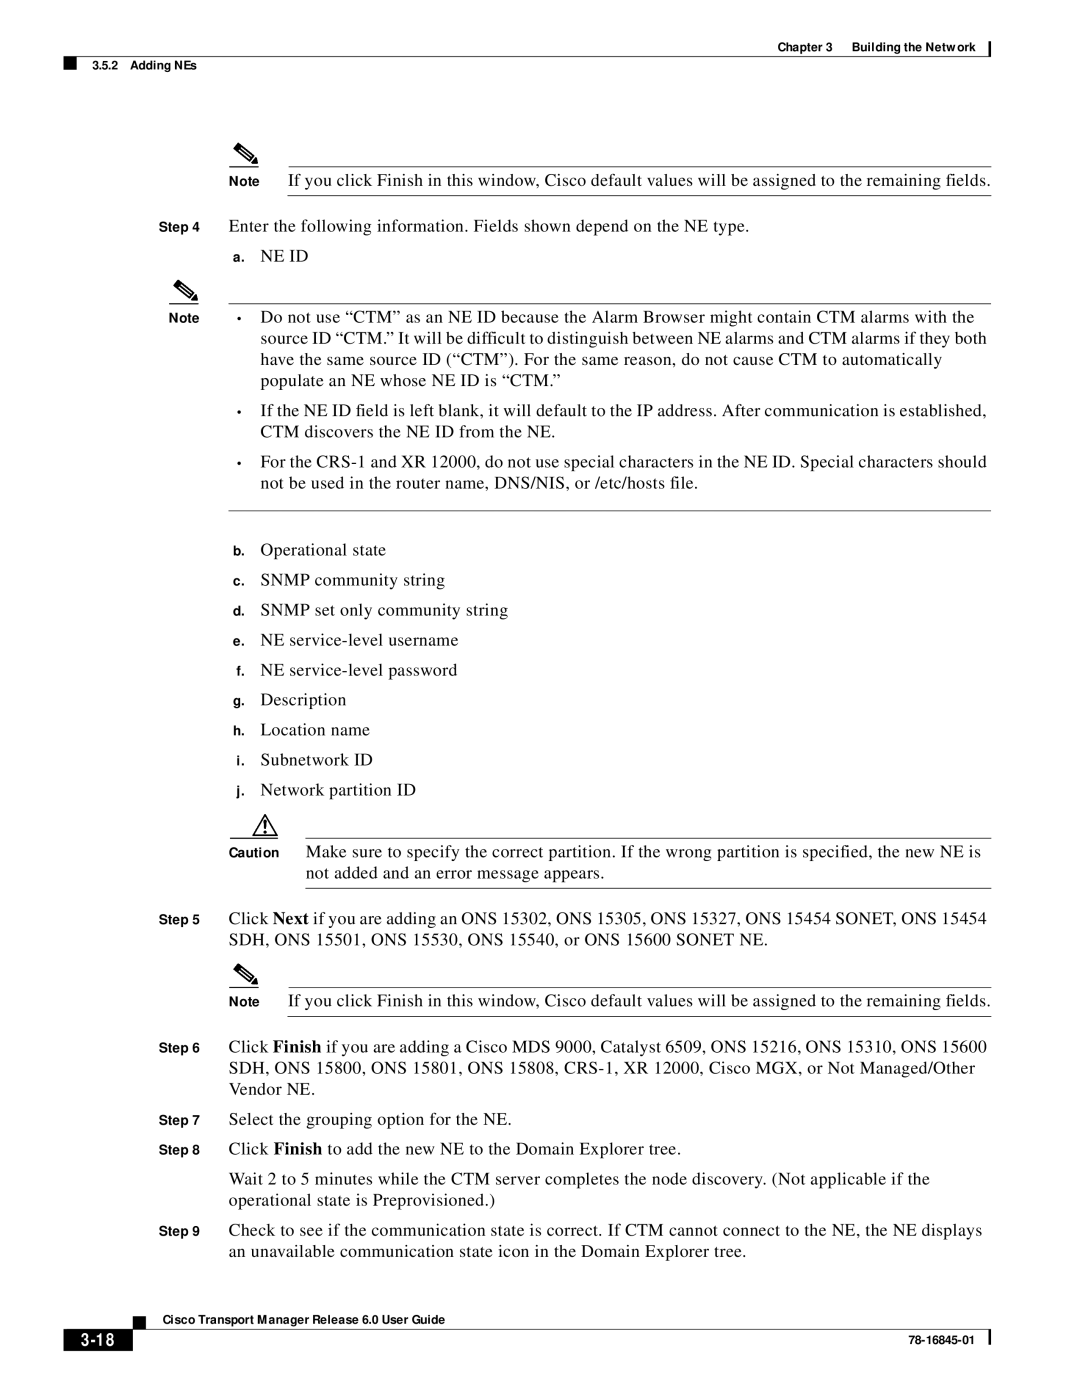 Cisco Systems 78-16845-01 manual 3-18, Step 